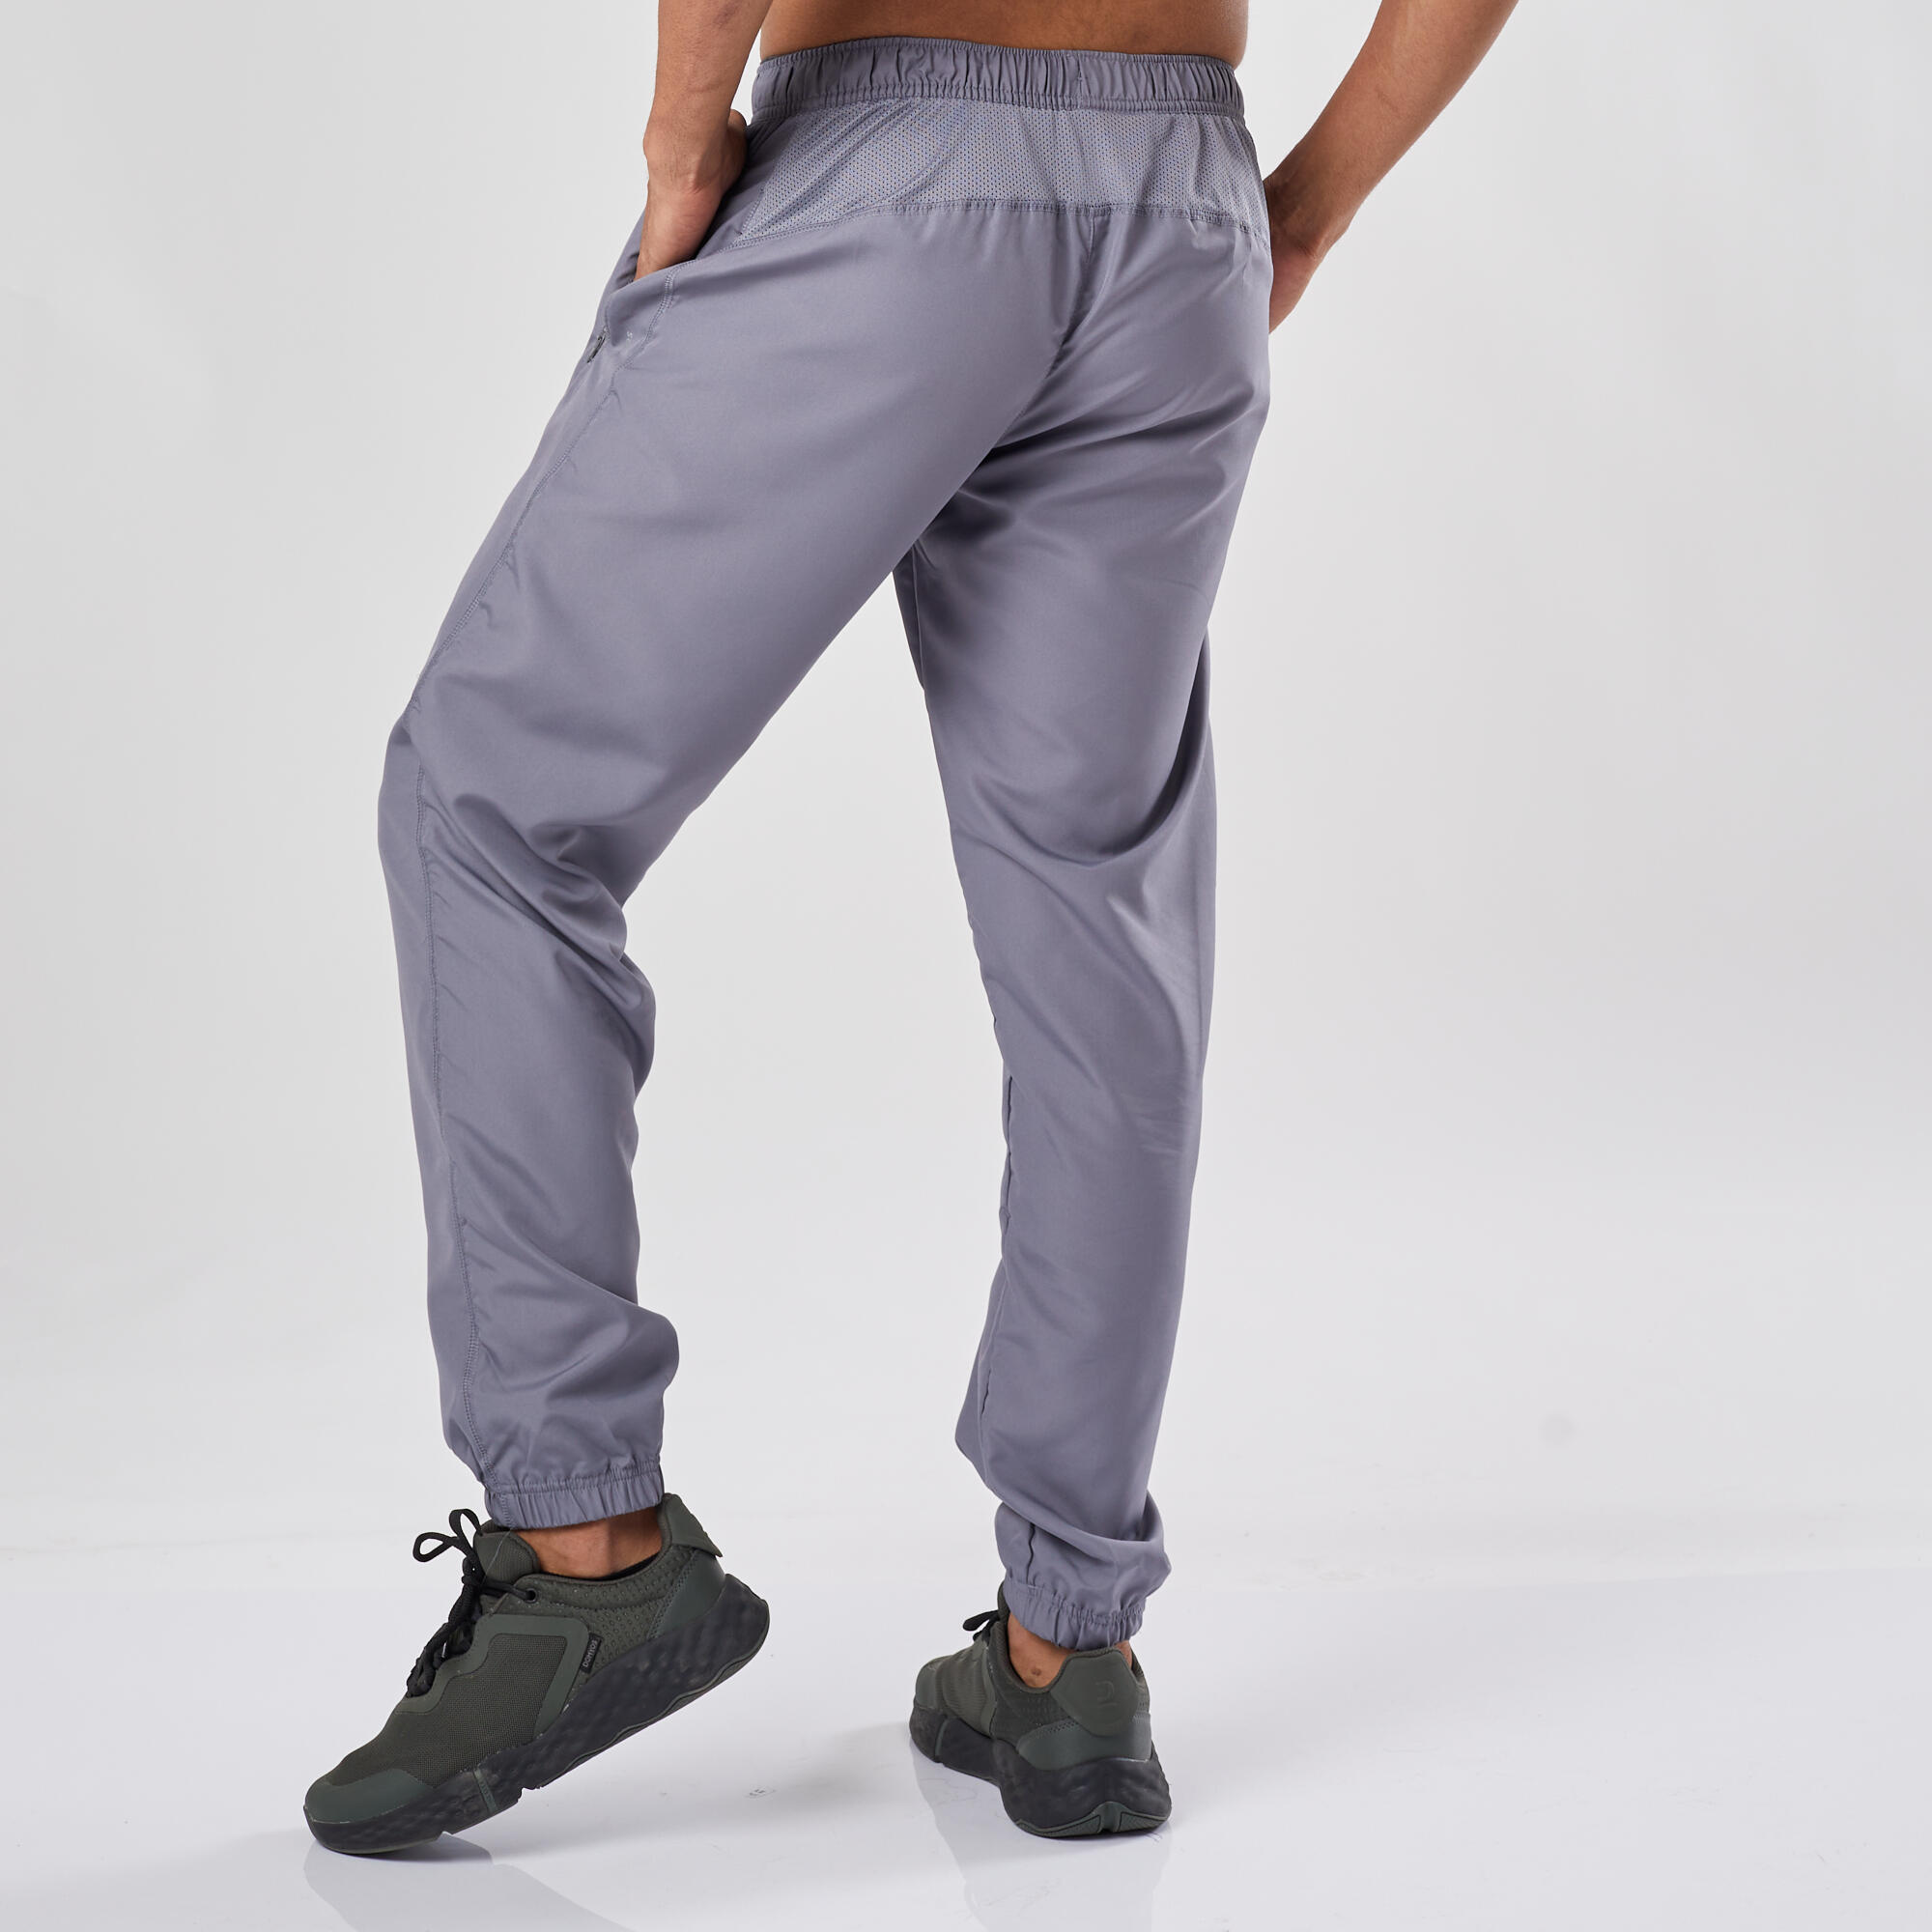 Buy Men's Running Breathable Trousers Dry - Black Online | Decathlon